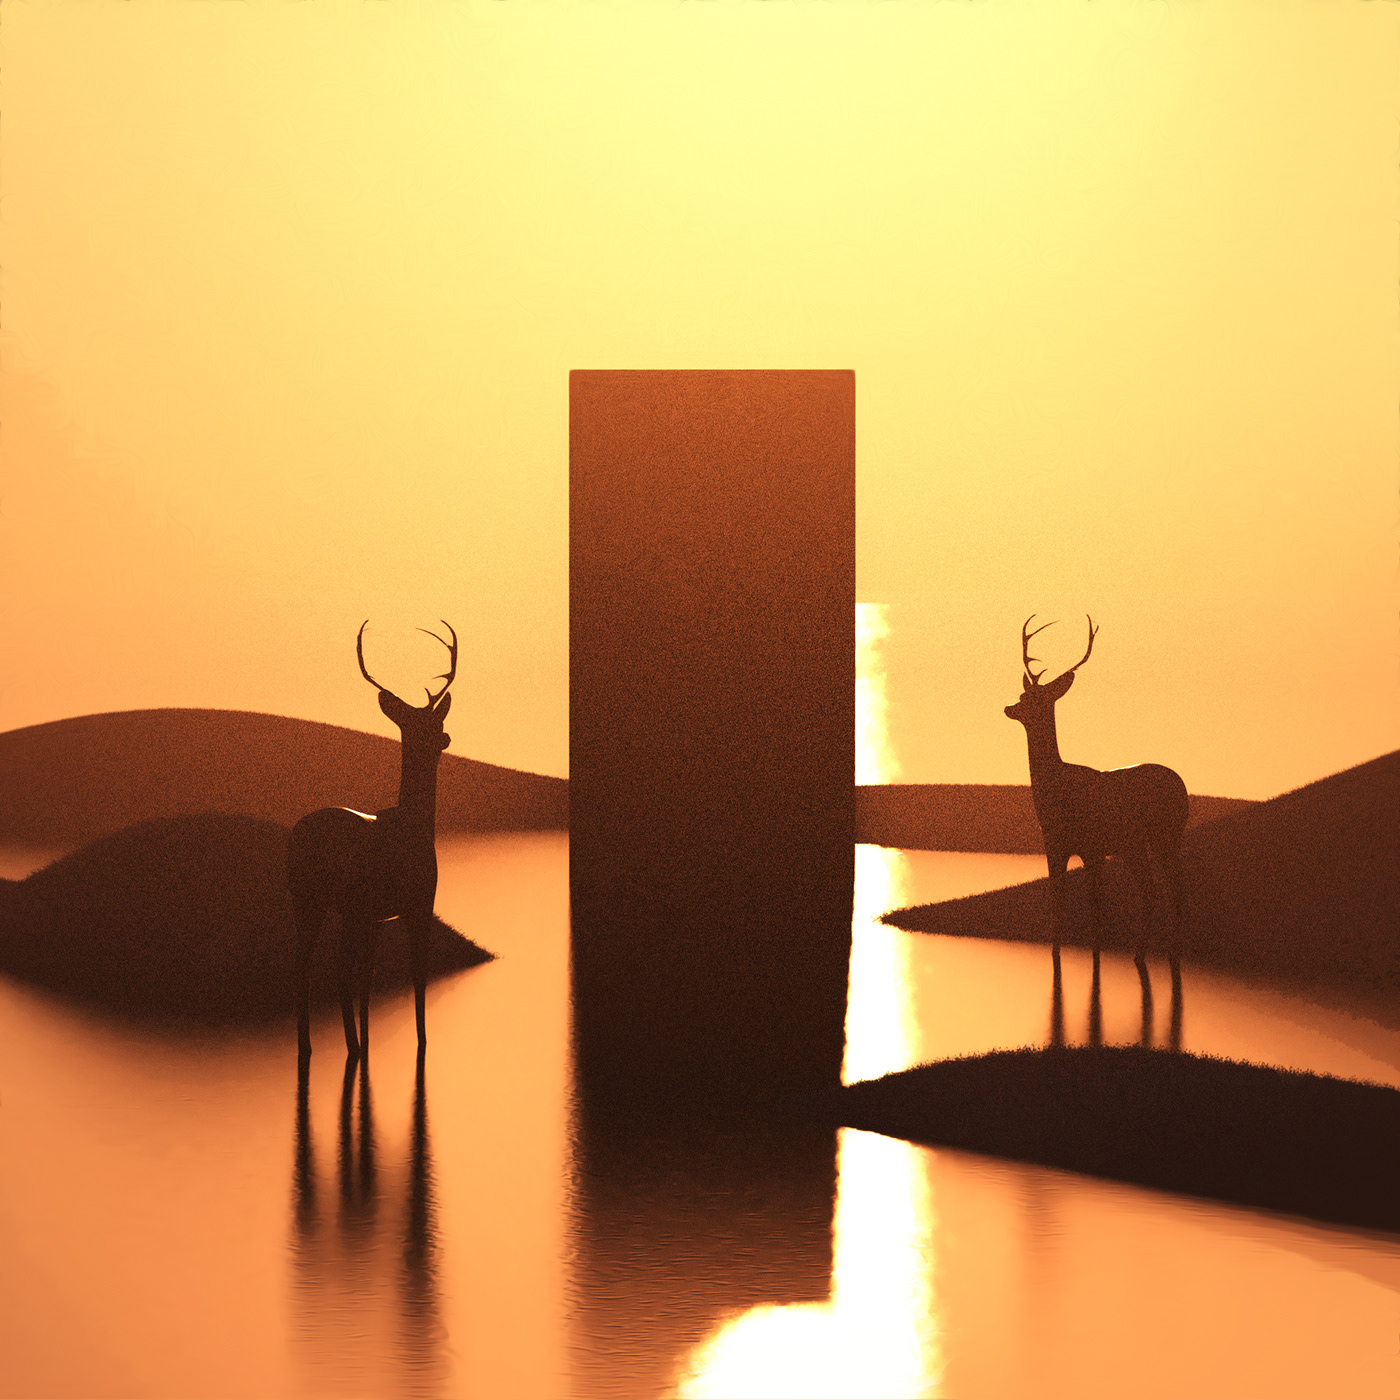 3D dreamscapes Isolation landscapes